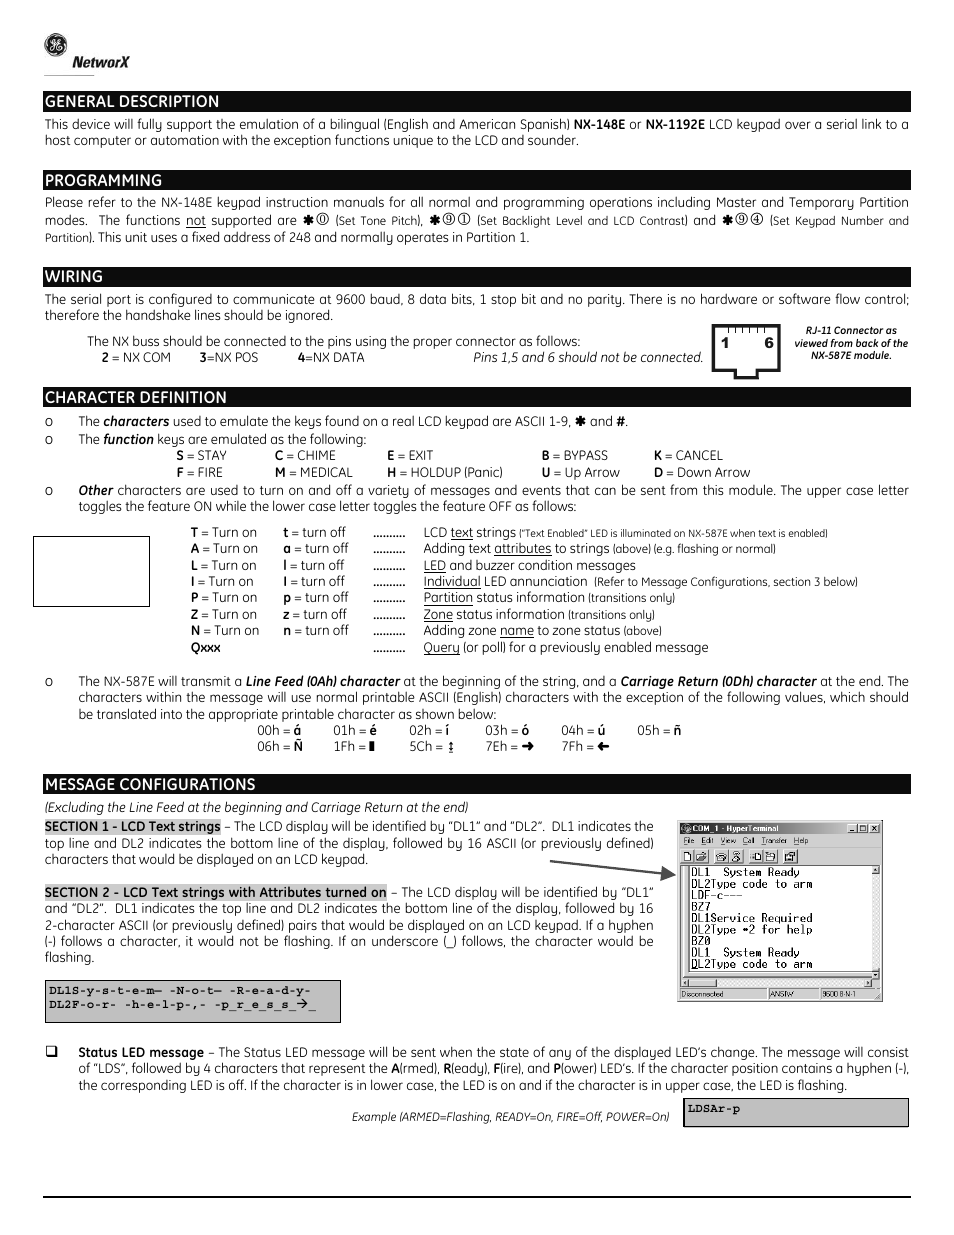 Interlogix NX-587E User Manual | 2 pages